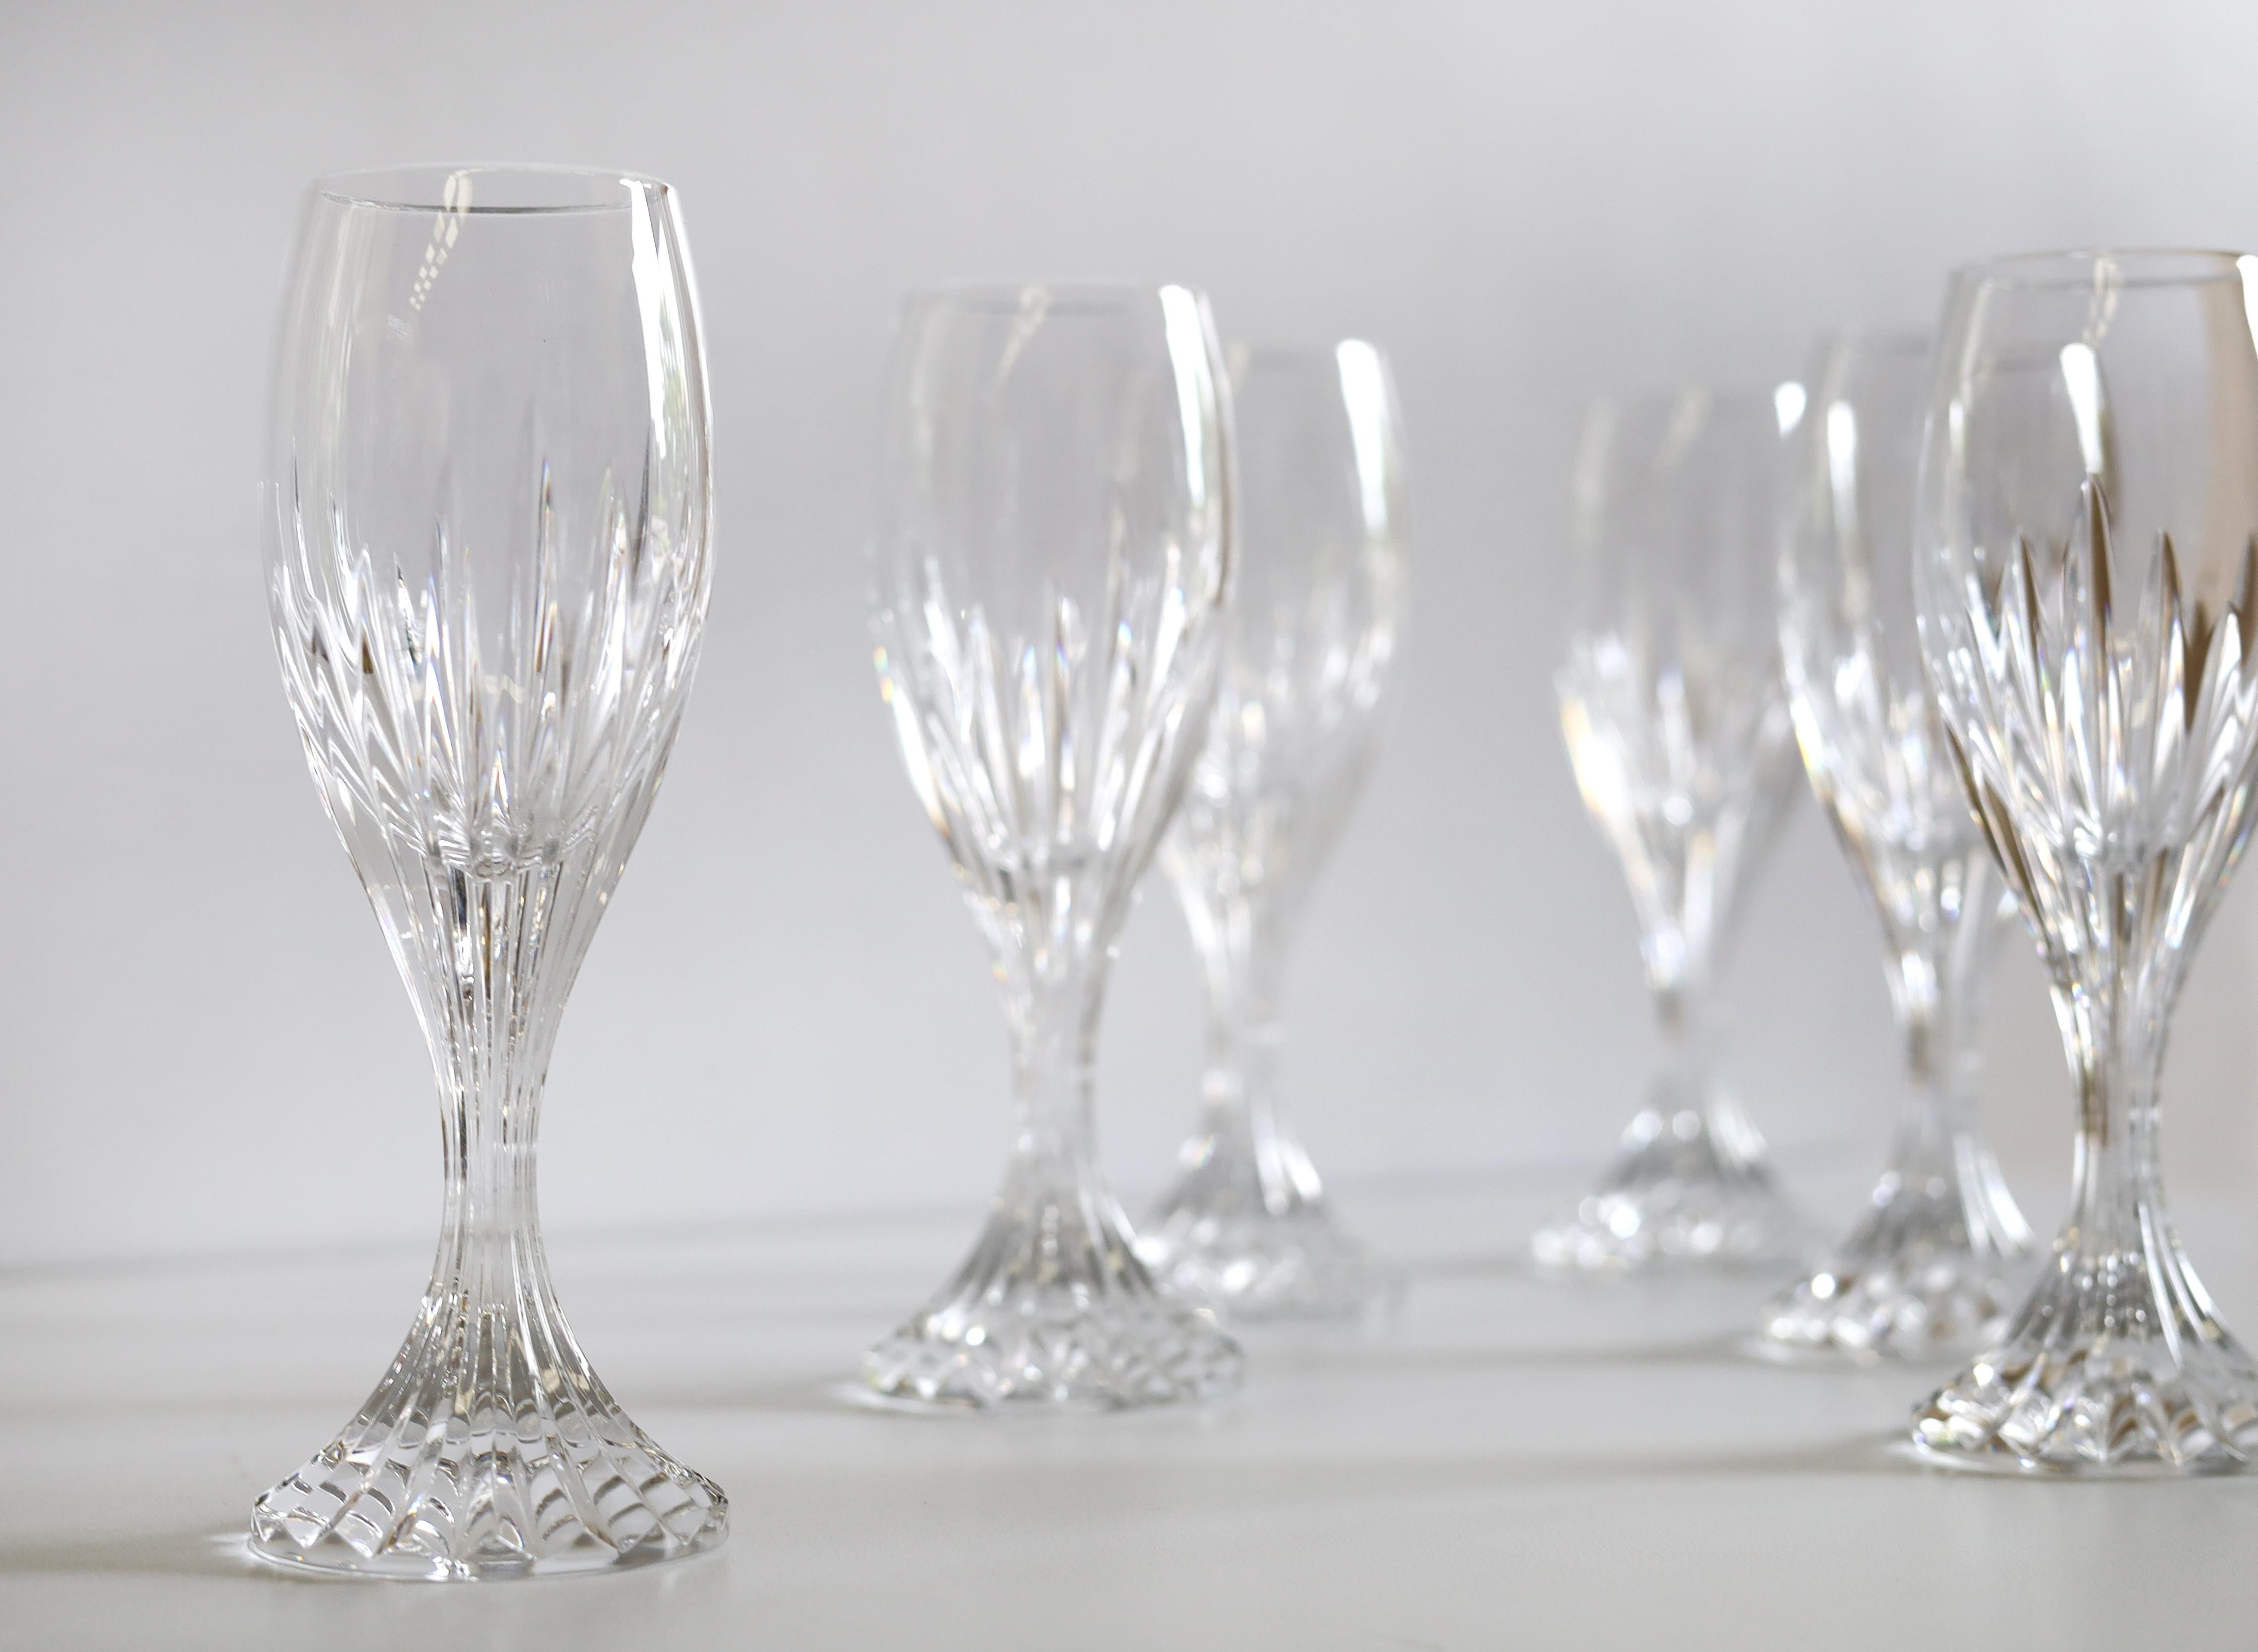 Hand-Crafted Set of 6 Baccarat Massena Liquor Glasses